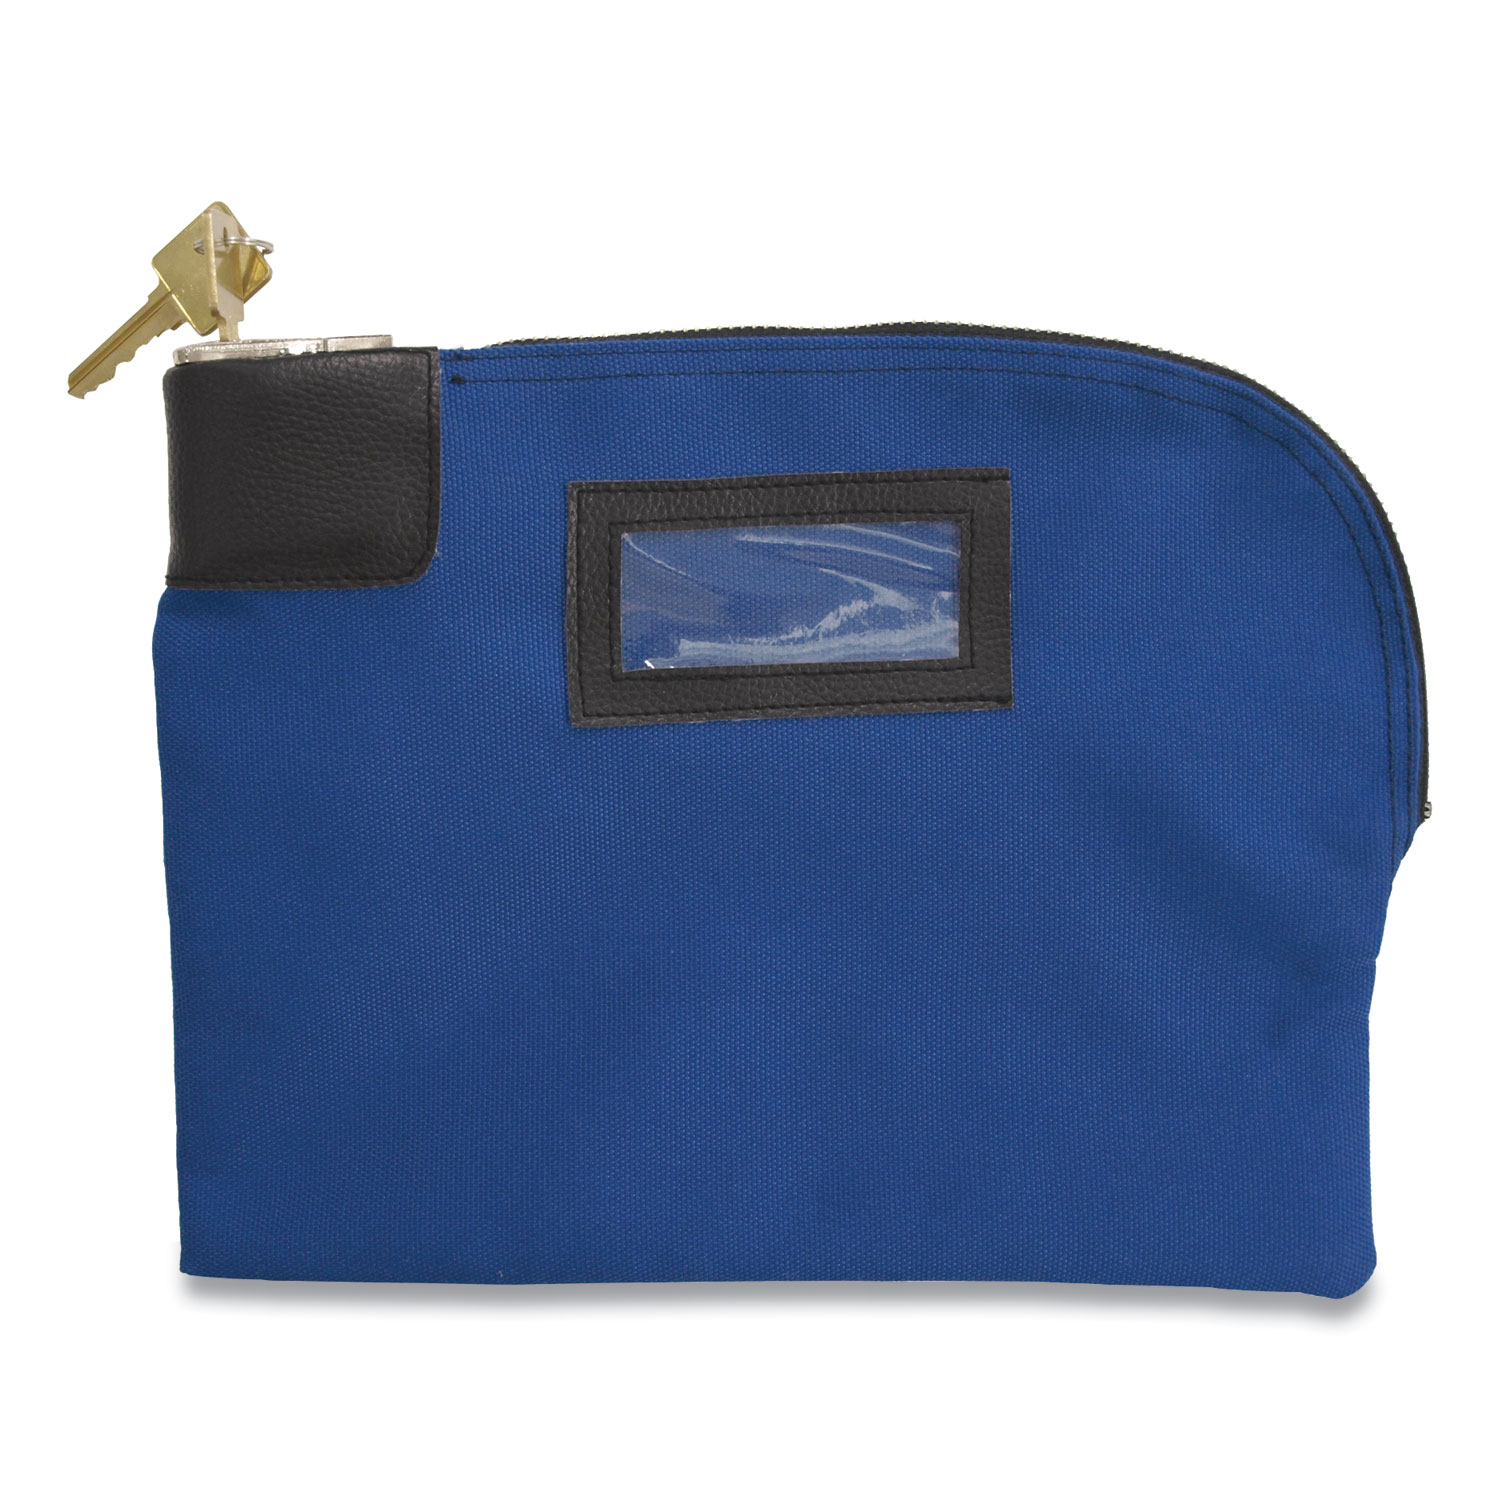 Fabric Deposit Bag, Locking, 8.5 x 11 x 1, Canvas, Blue